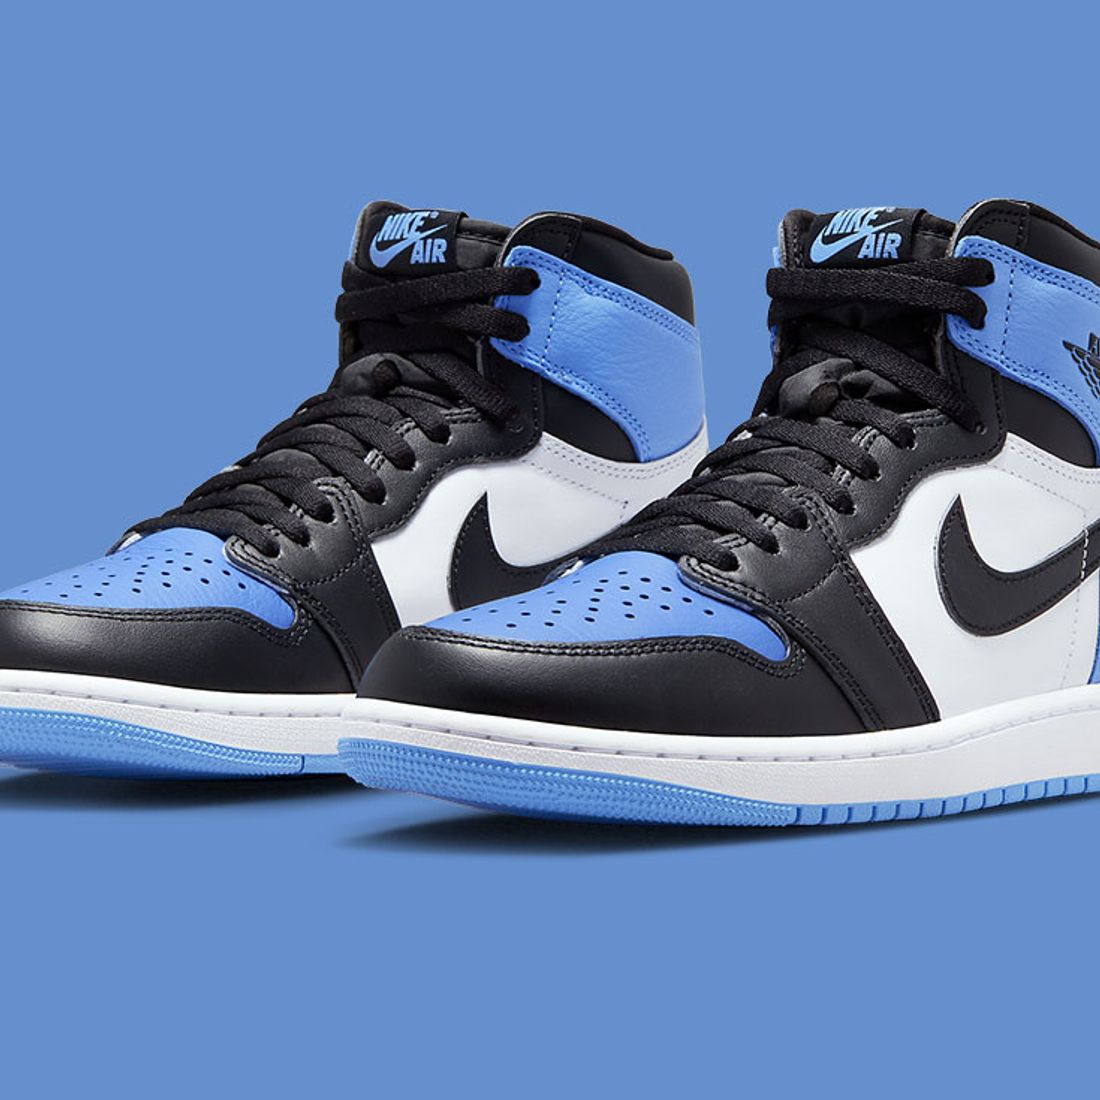 Off-White 'Powder Blue' Air Jordan 1s Release Again - Sneaker Freaker